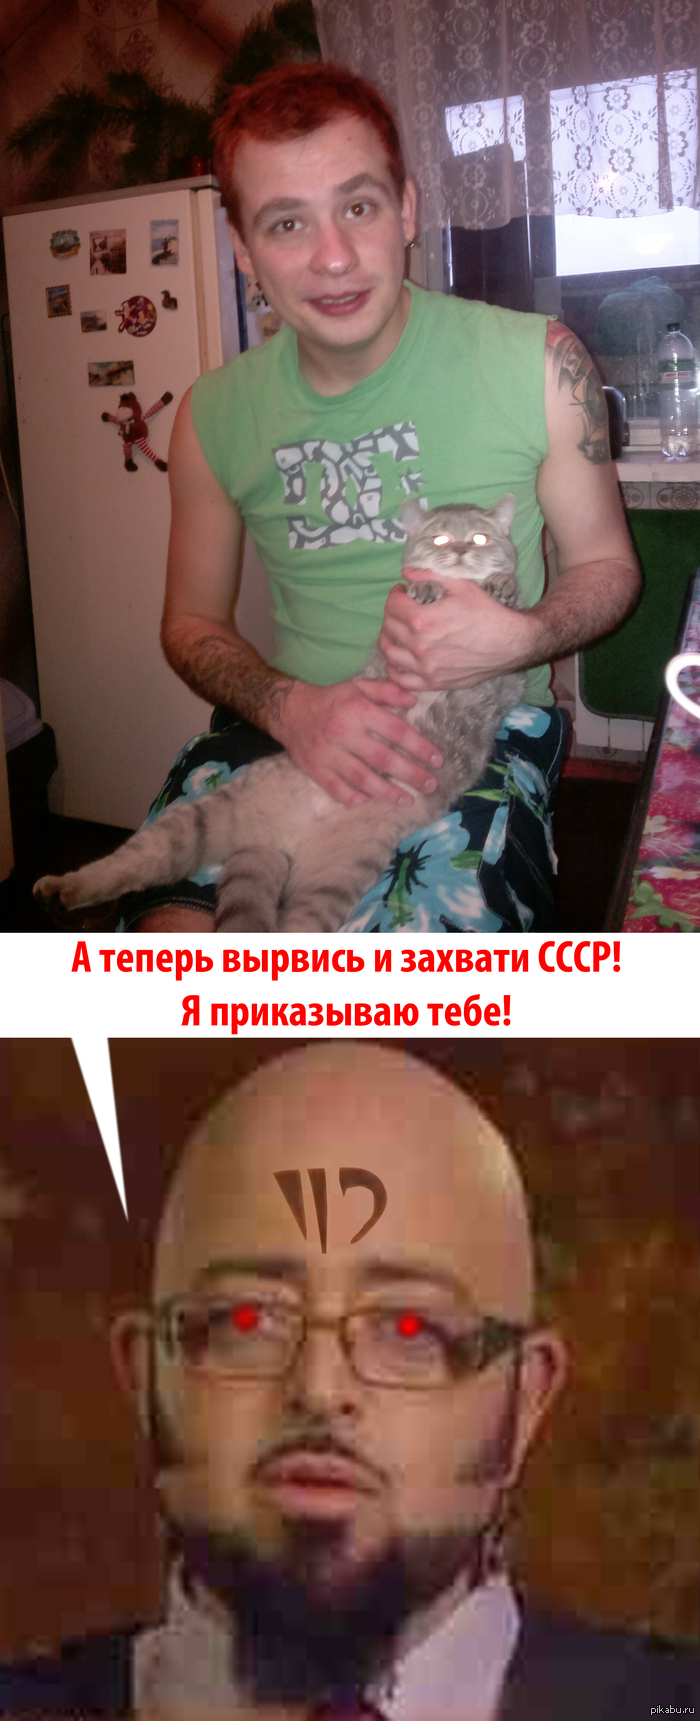     ,     <a href="http://pikabu.ru/story/yetot_muzhik_1837819">http://pikabu.ru/story/_1837819</a>    , ? ..   .  .   .        .  .